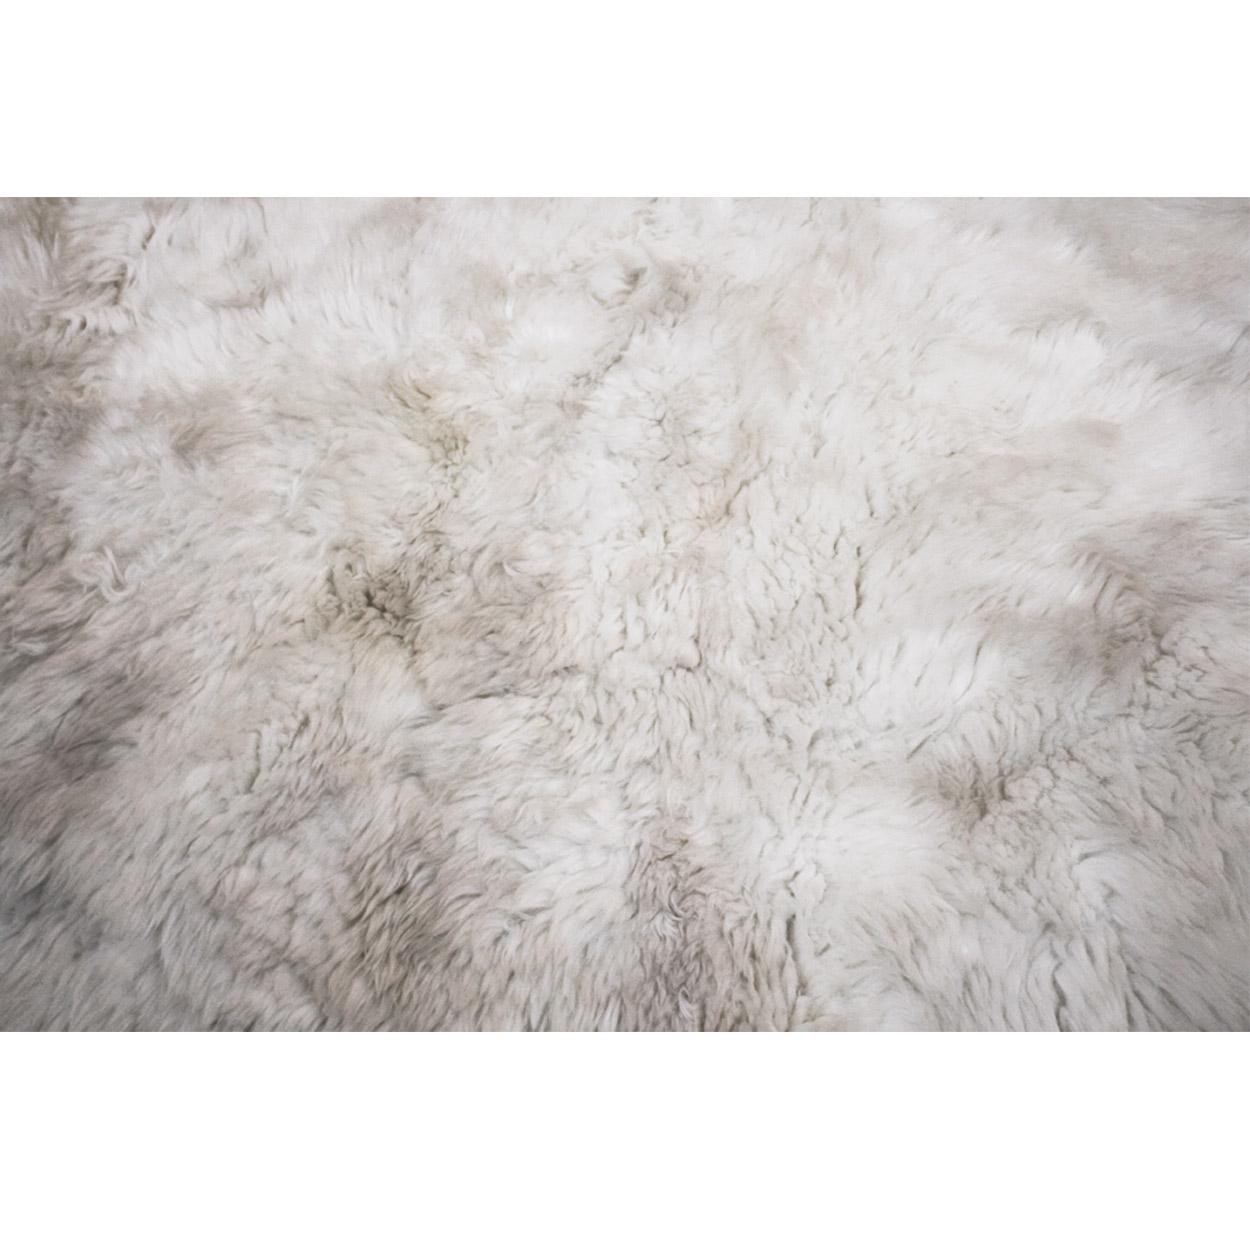 Natural sheep hair pile rug.

Measurements: 240 x 220 cm